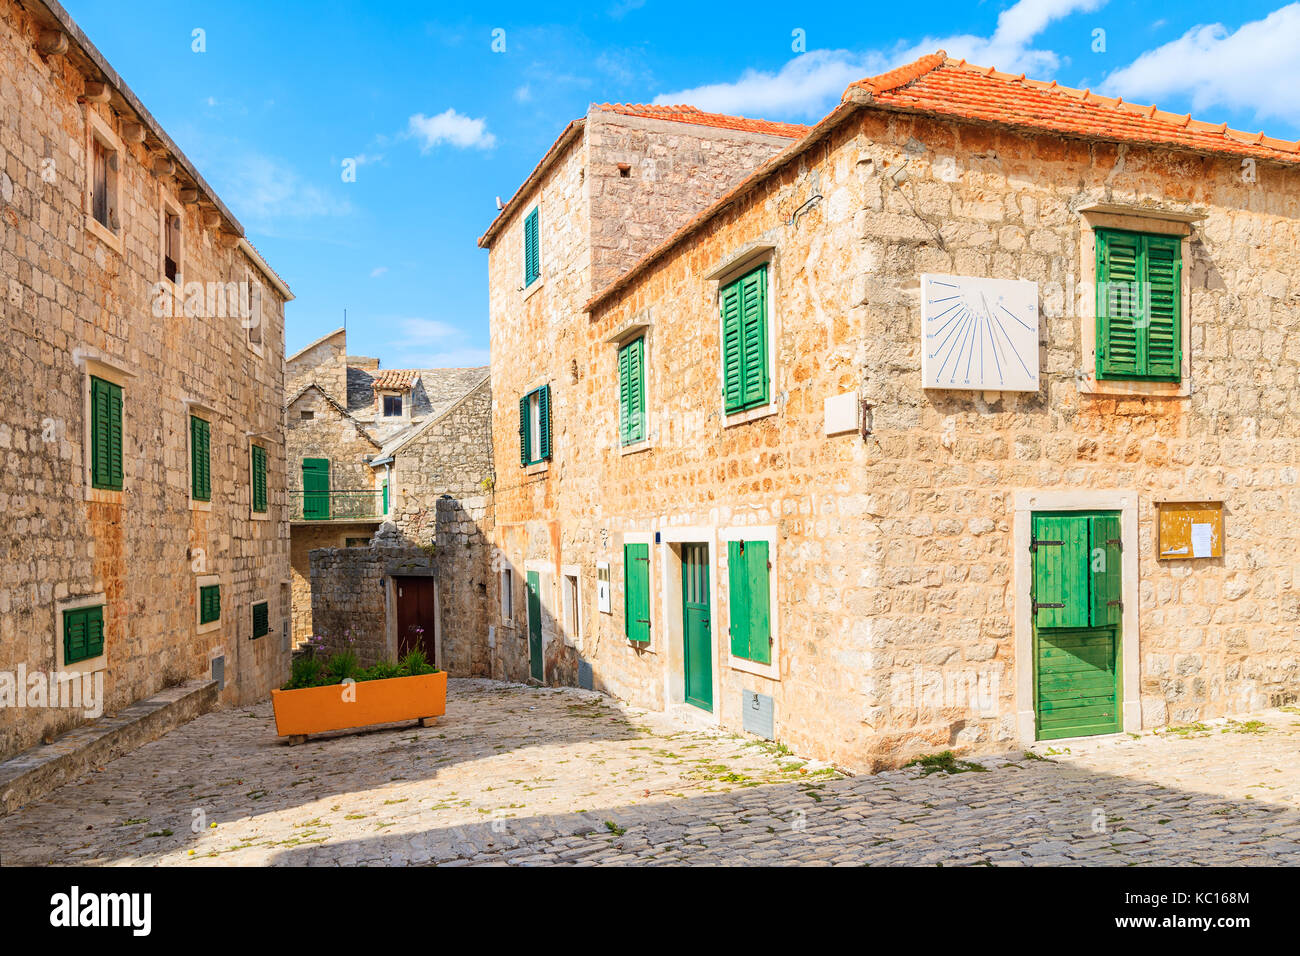 POSTIRA TOWN, CROATIA - SEP 7, 2017: Street with typical stone houses in Postira old town, Brac island, Croatia. Stock Photo